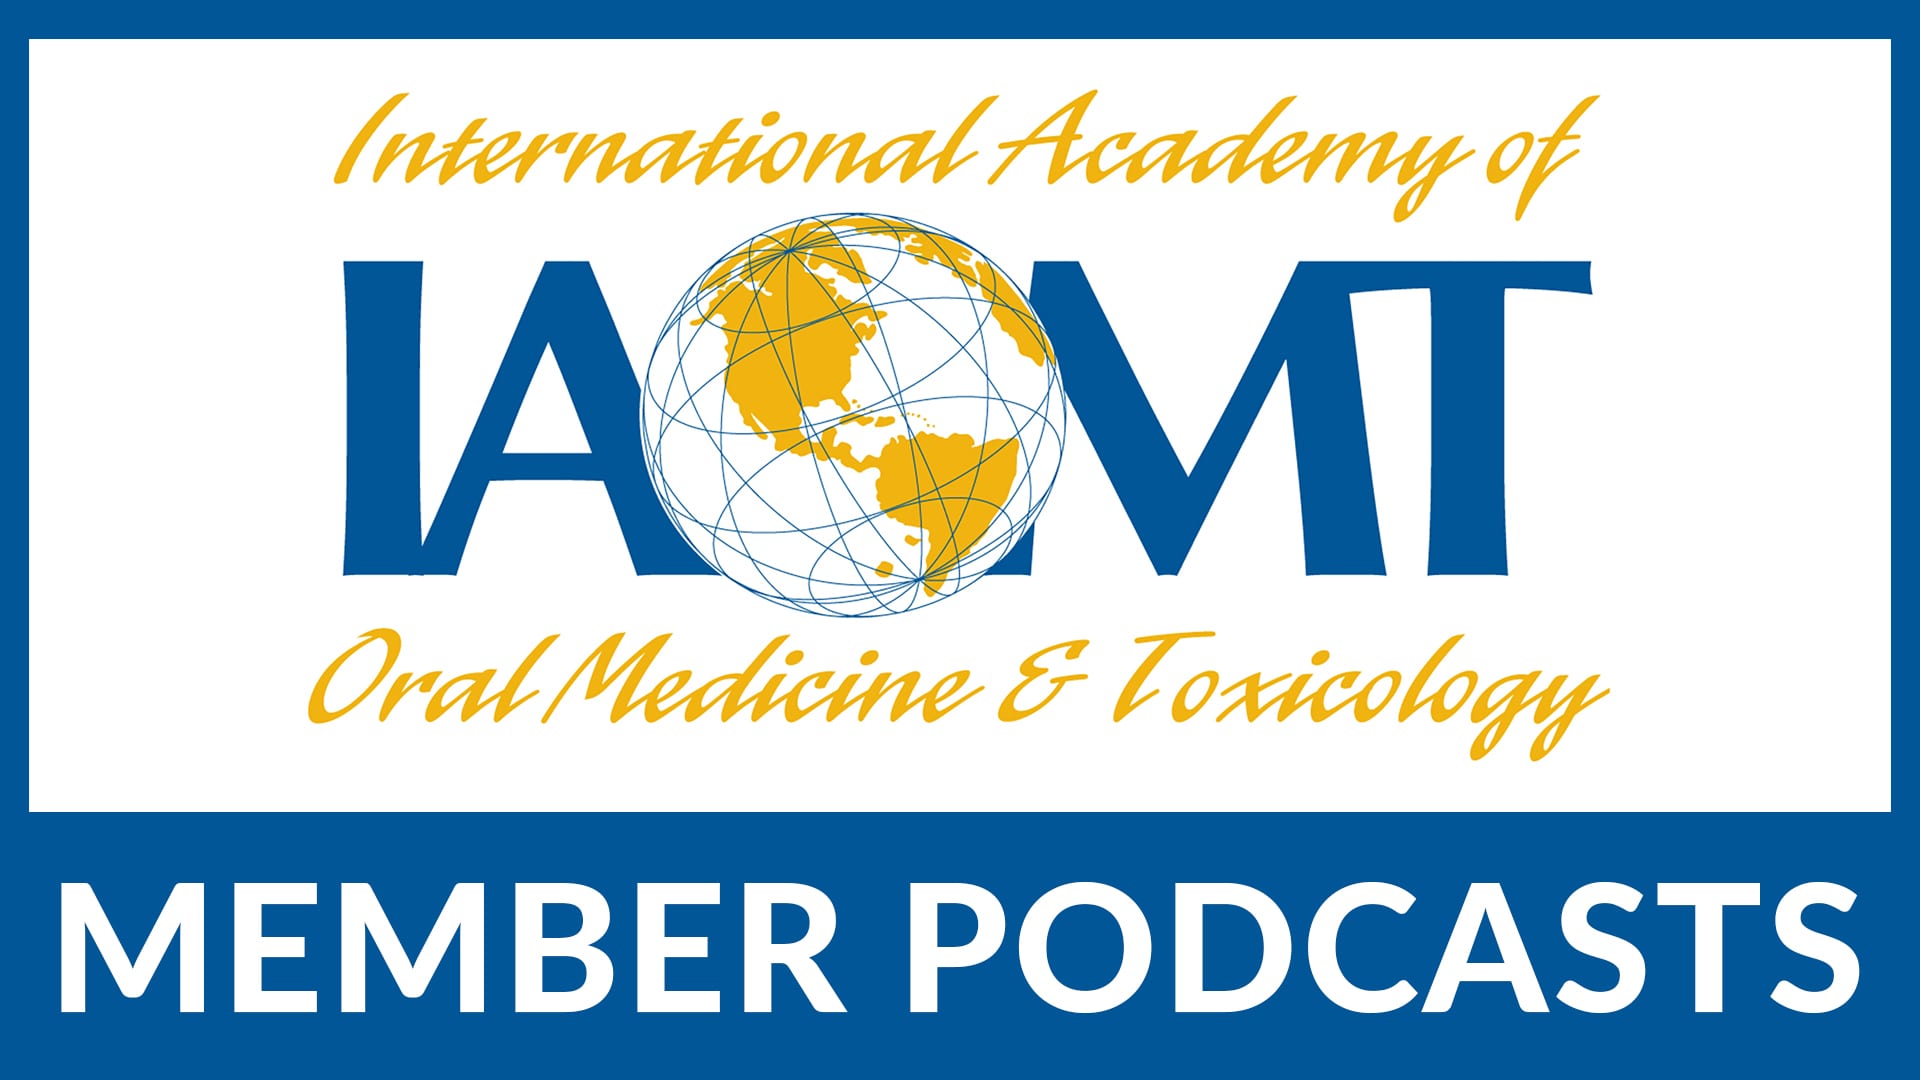 IAOMT member podcasts